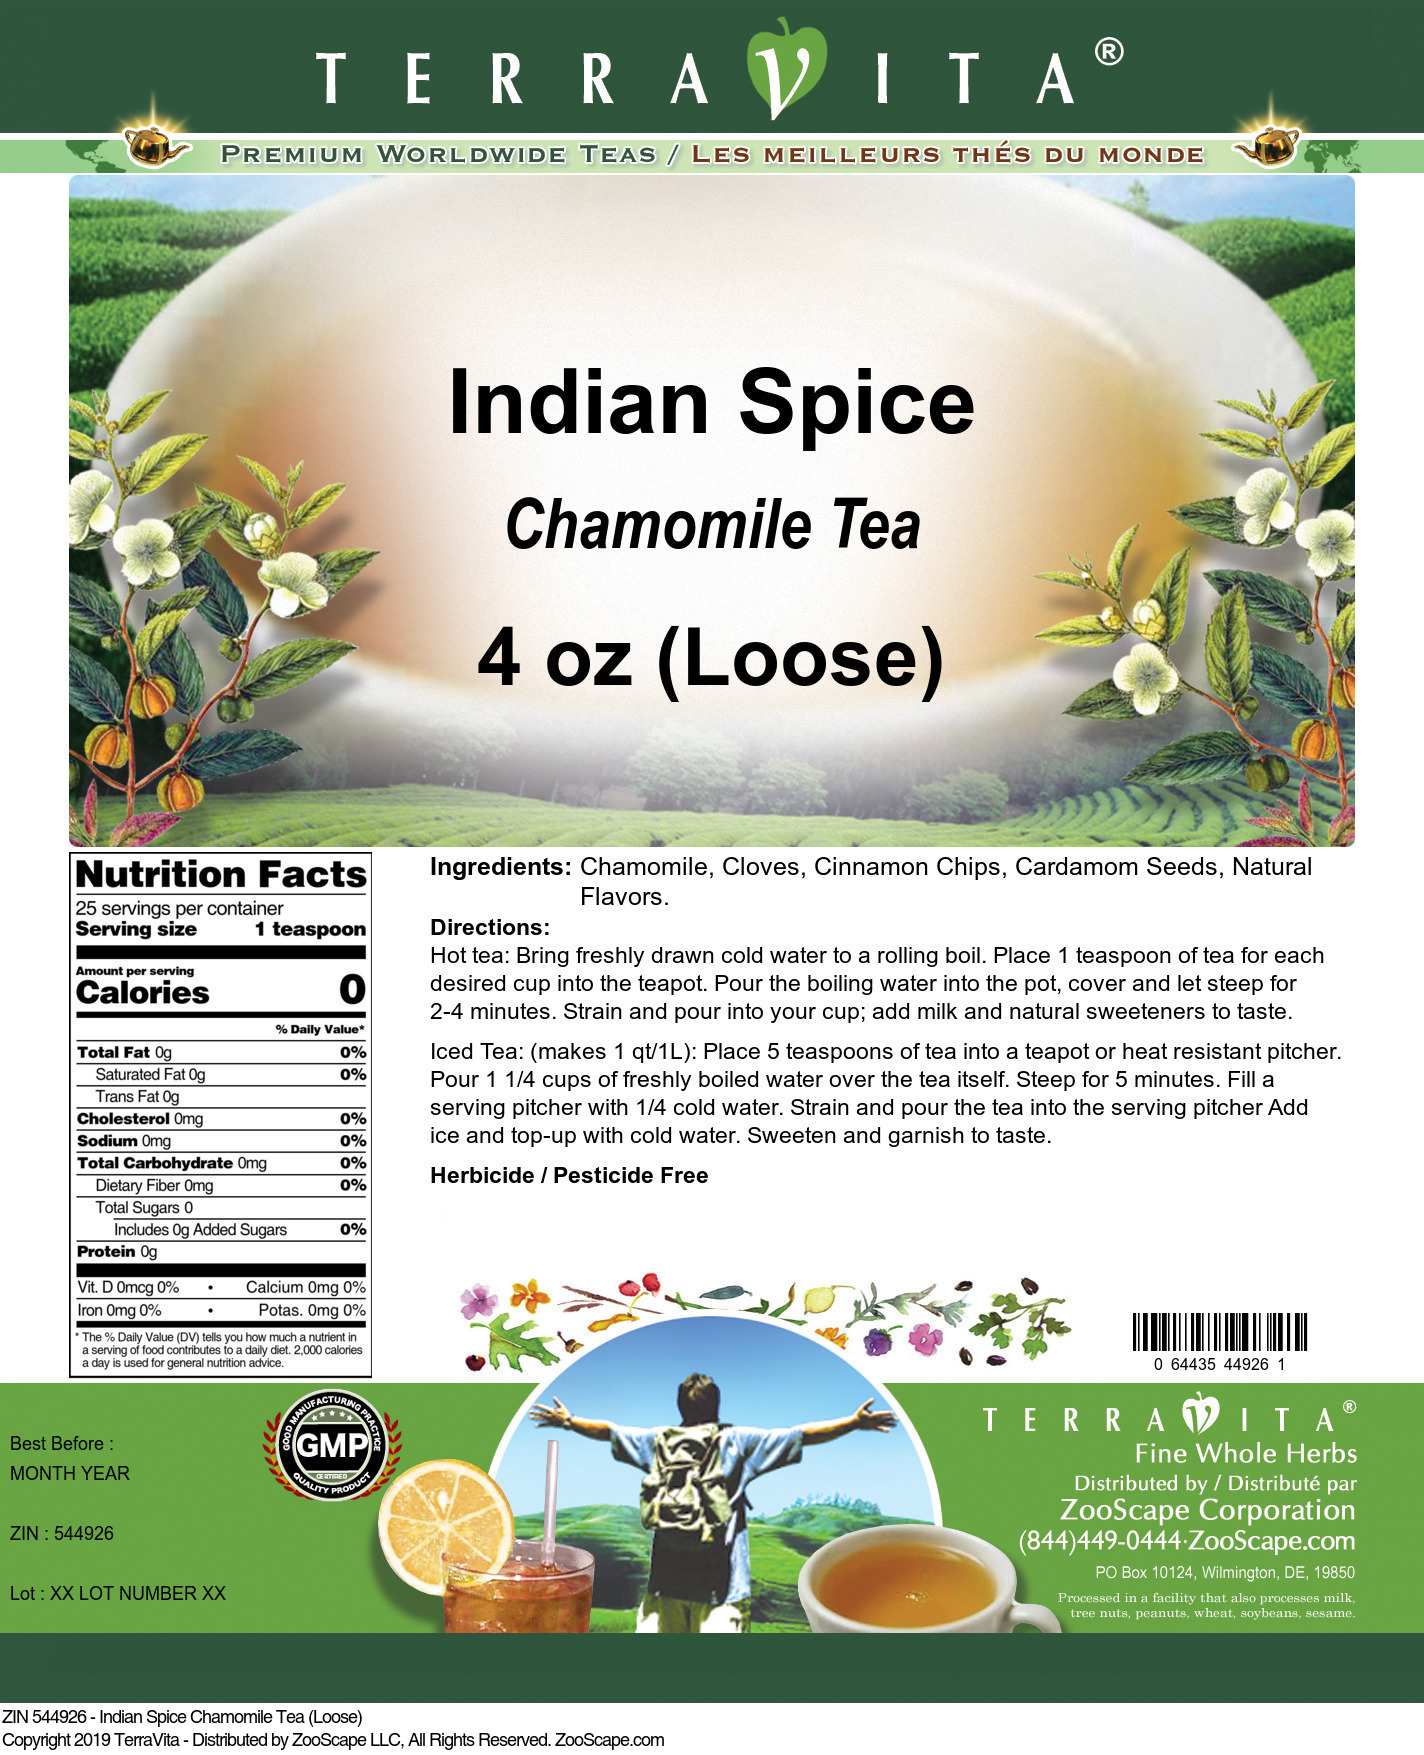 Indian Spice Chamomile Tea (Loose) - Label